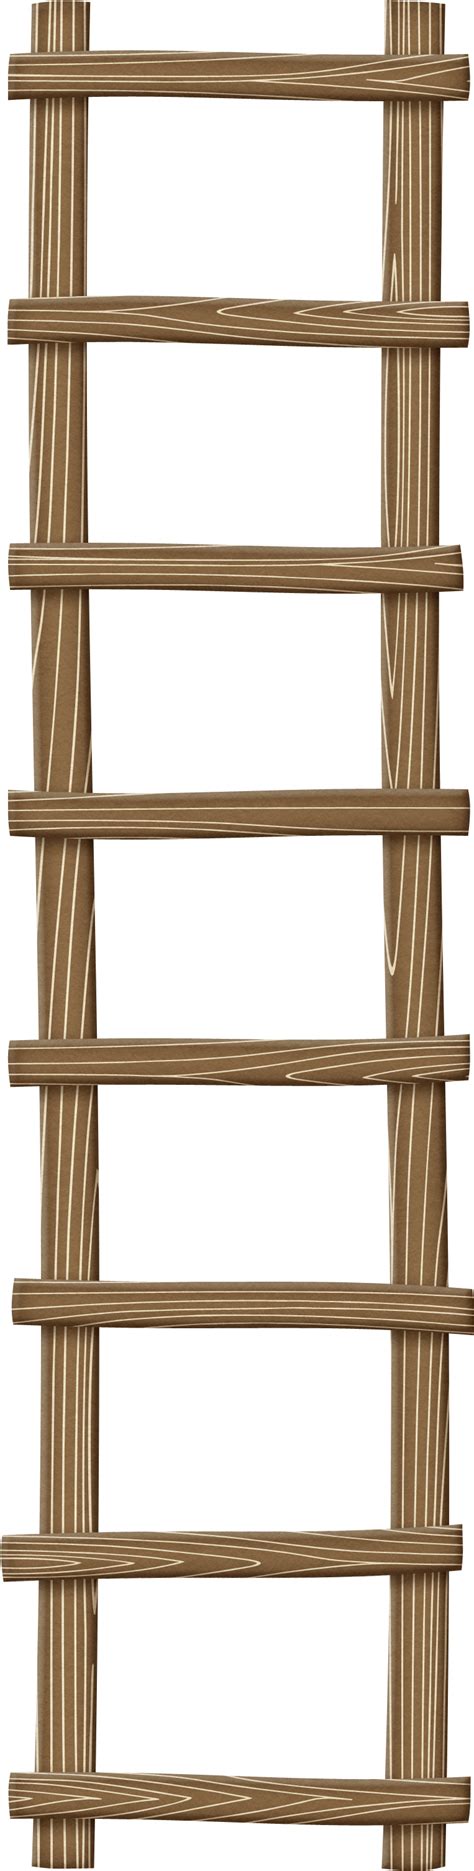 Wood ladder PNG